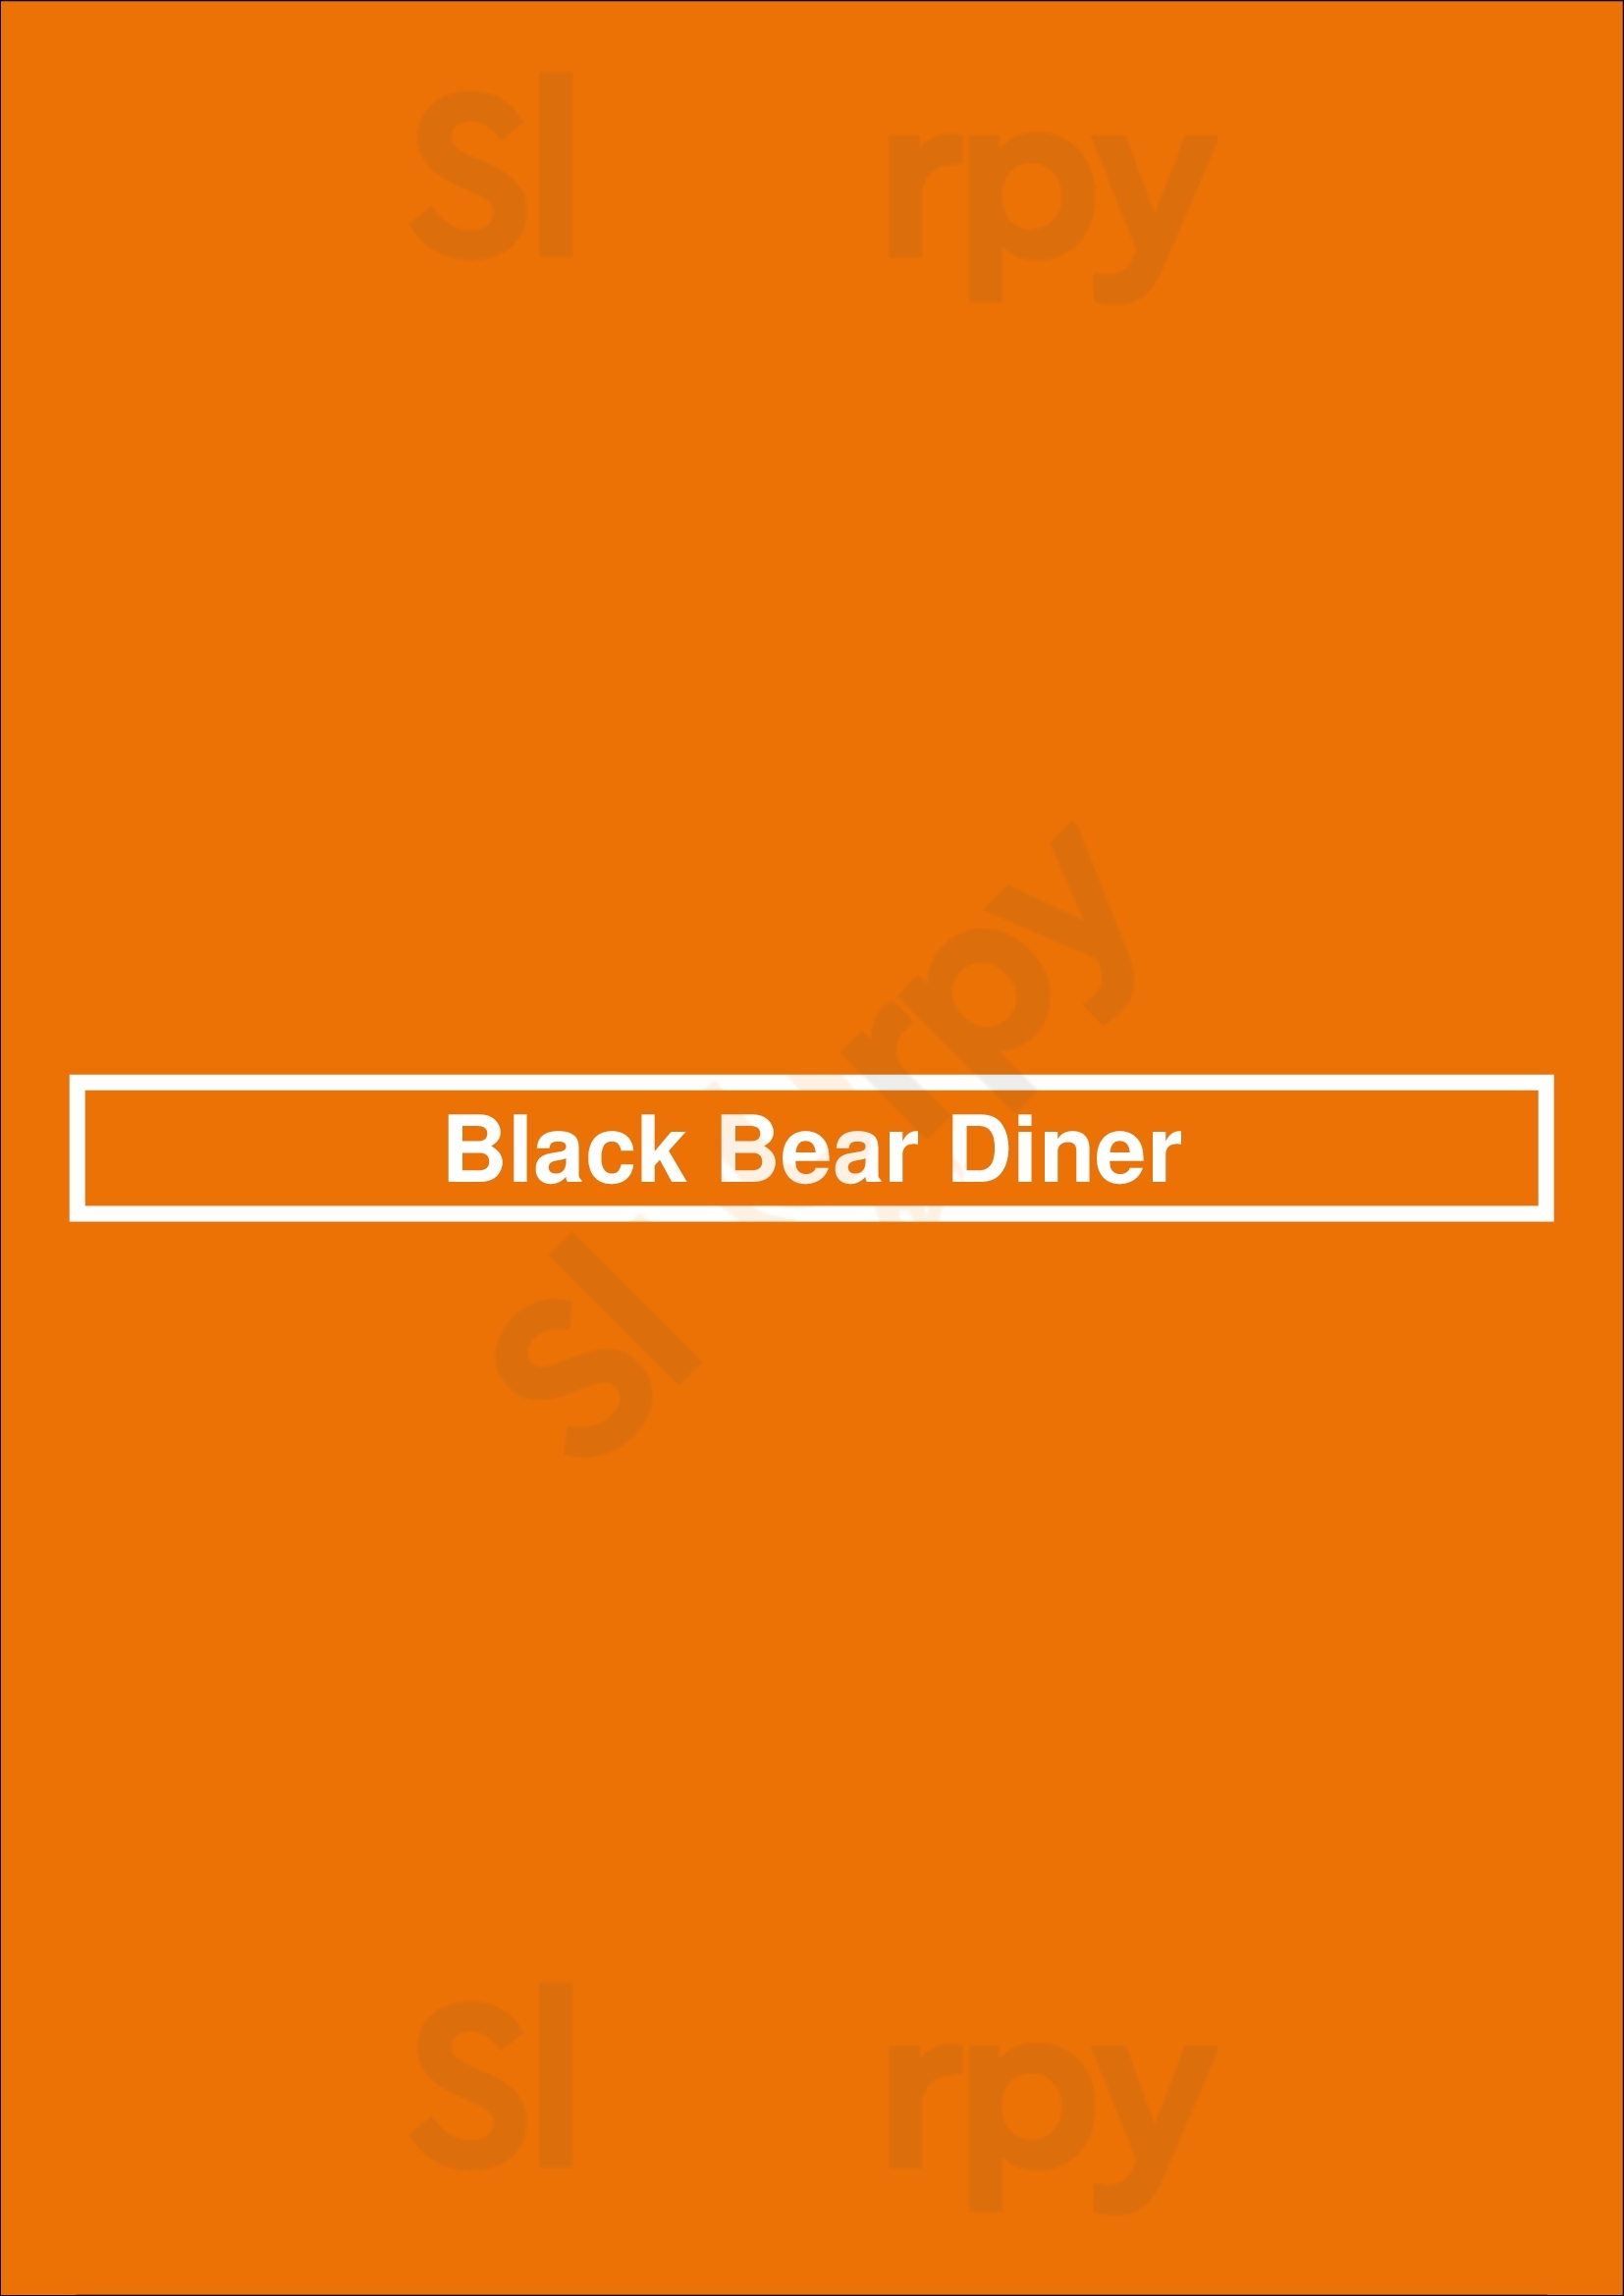 Black Bear Diner Colorado Springs Menu - 1